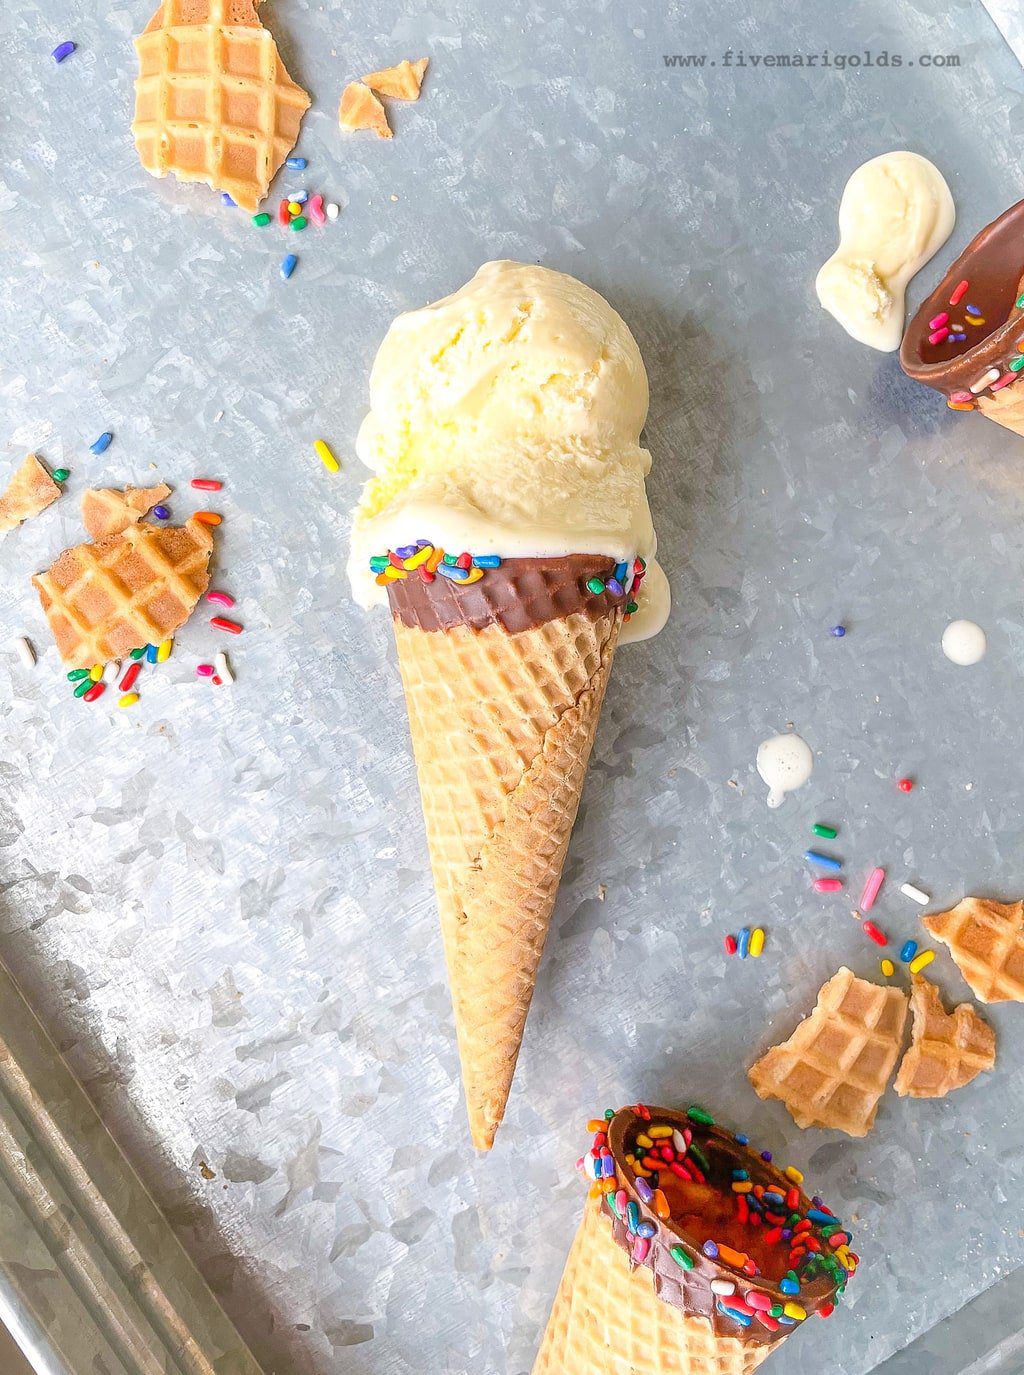 Marshmallow vanilla ice cream cones on steel background with sprinkles